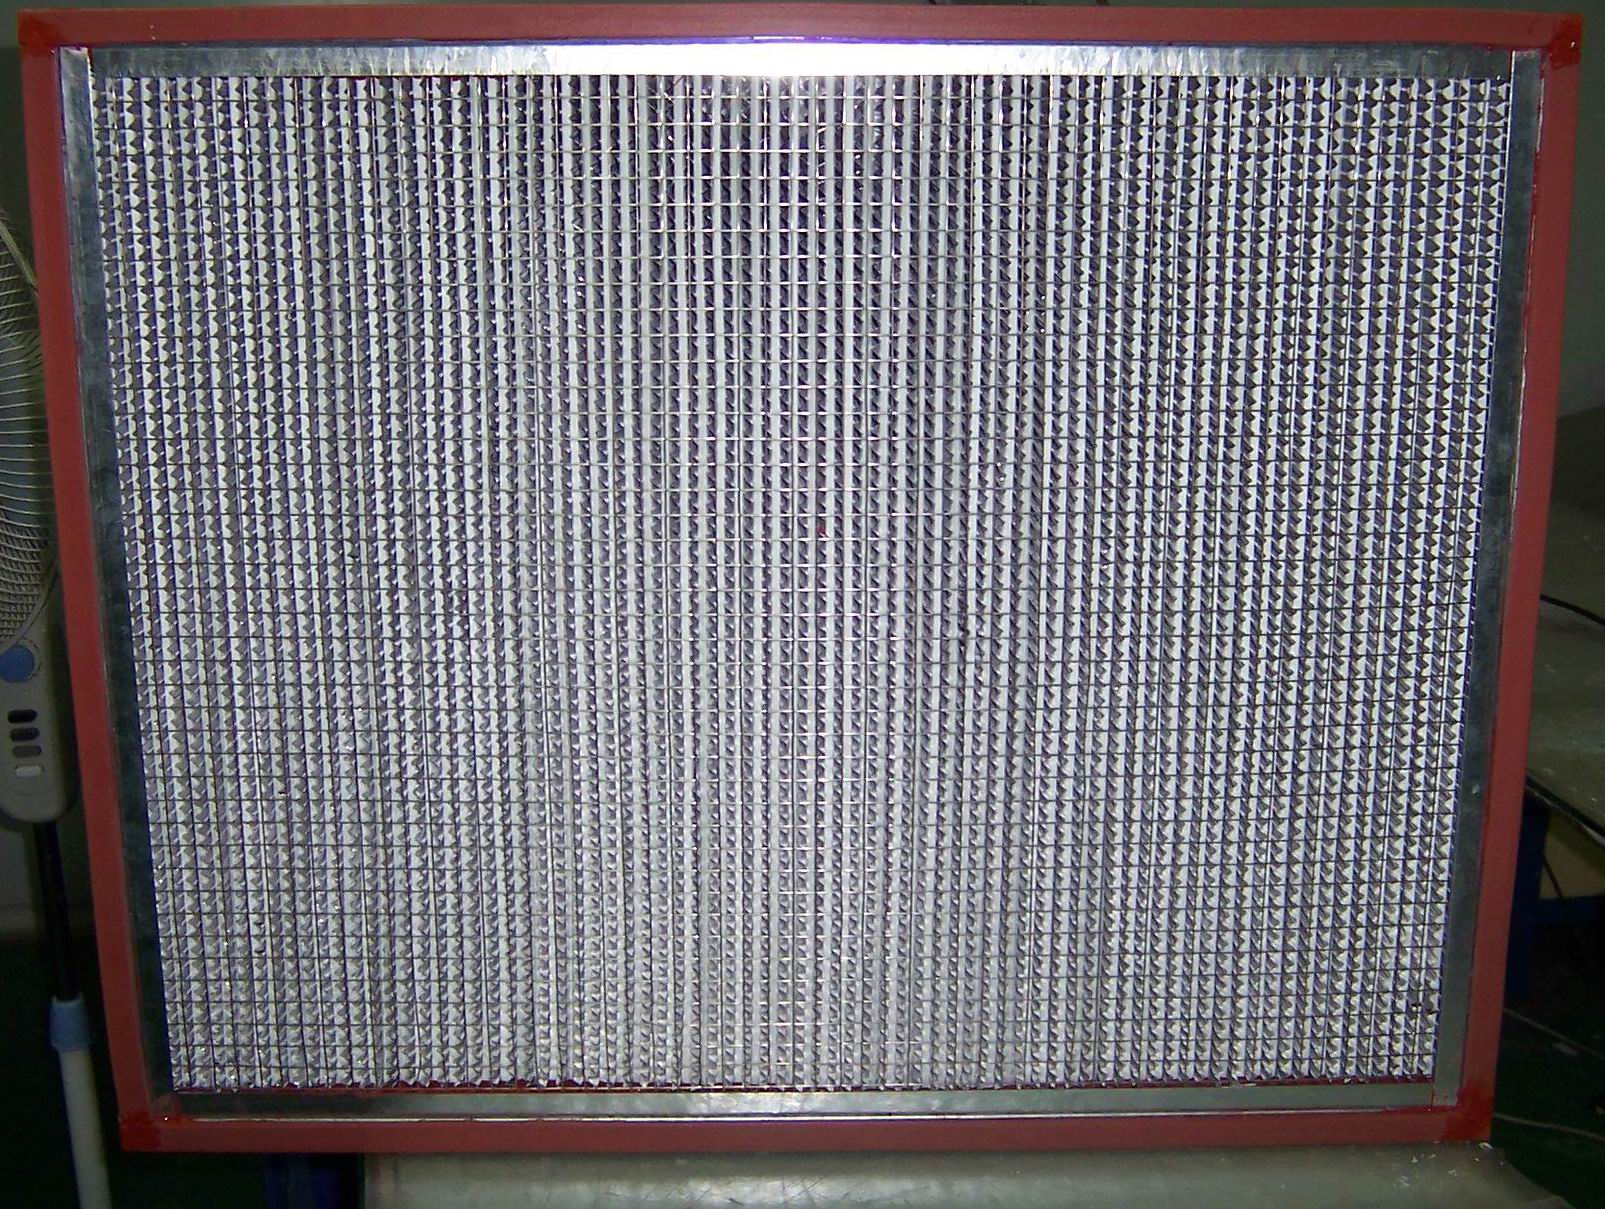 Hot sale Metal grill filter for ventilation system, metal air filter,w sharp alu.metal mesh filter